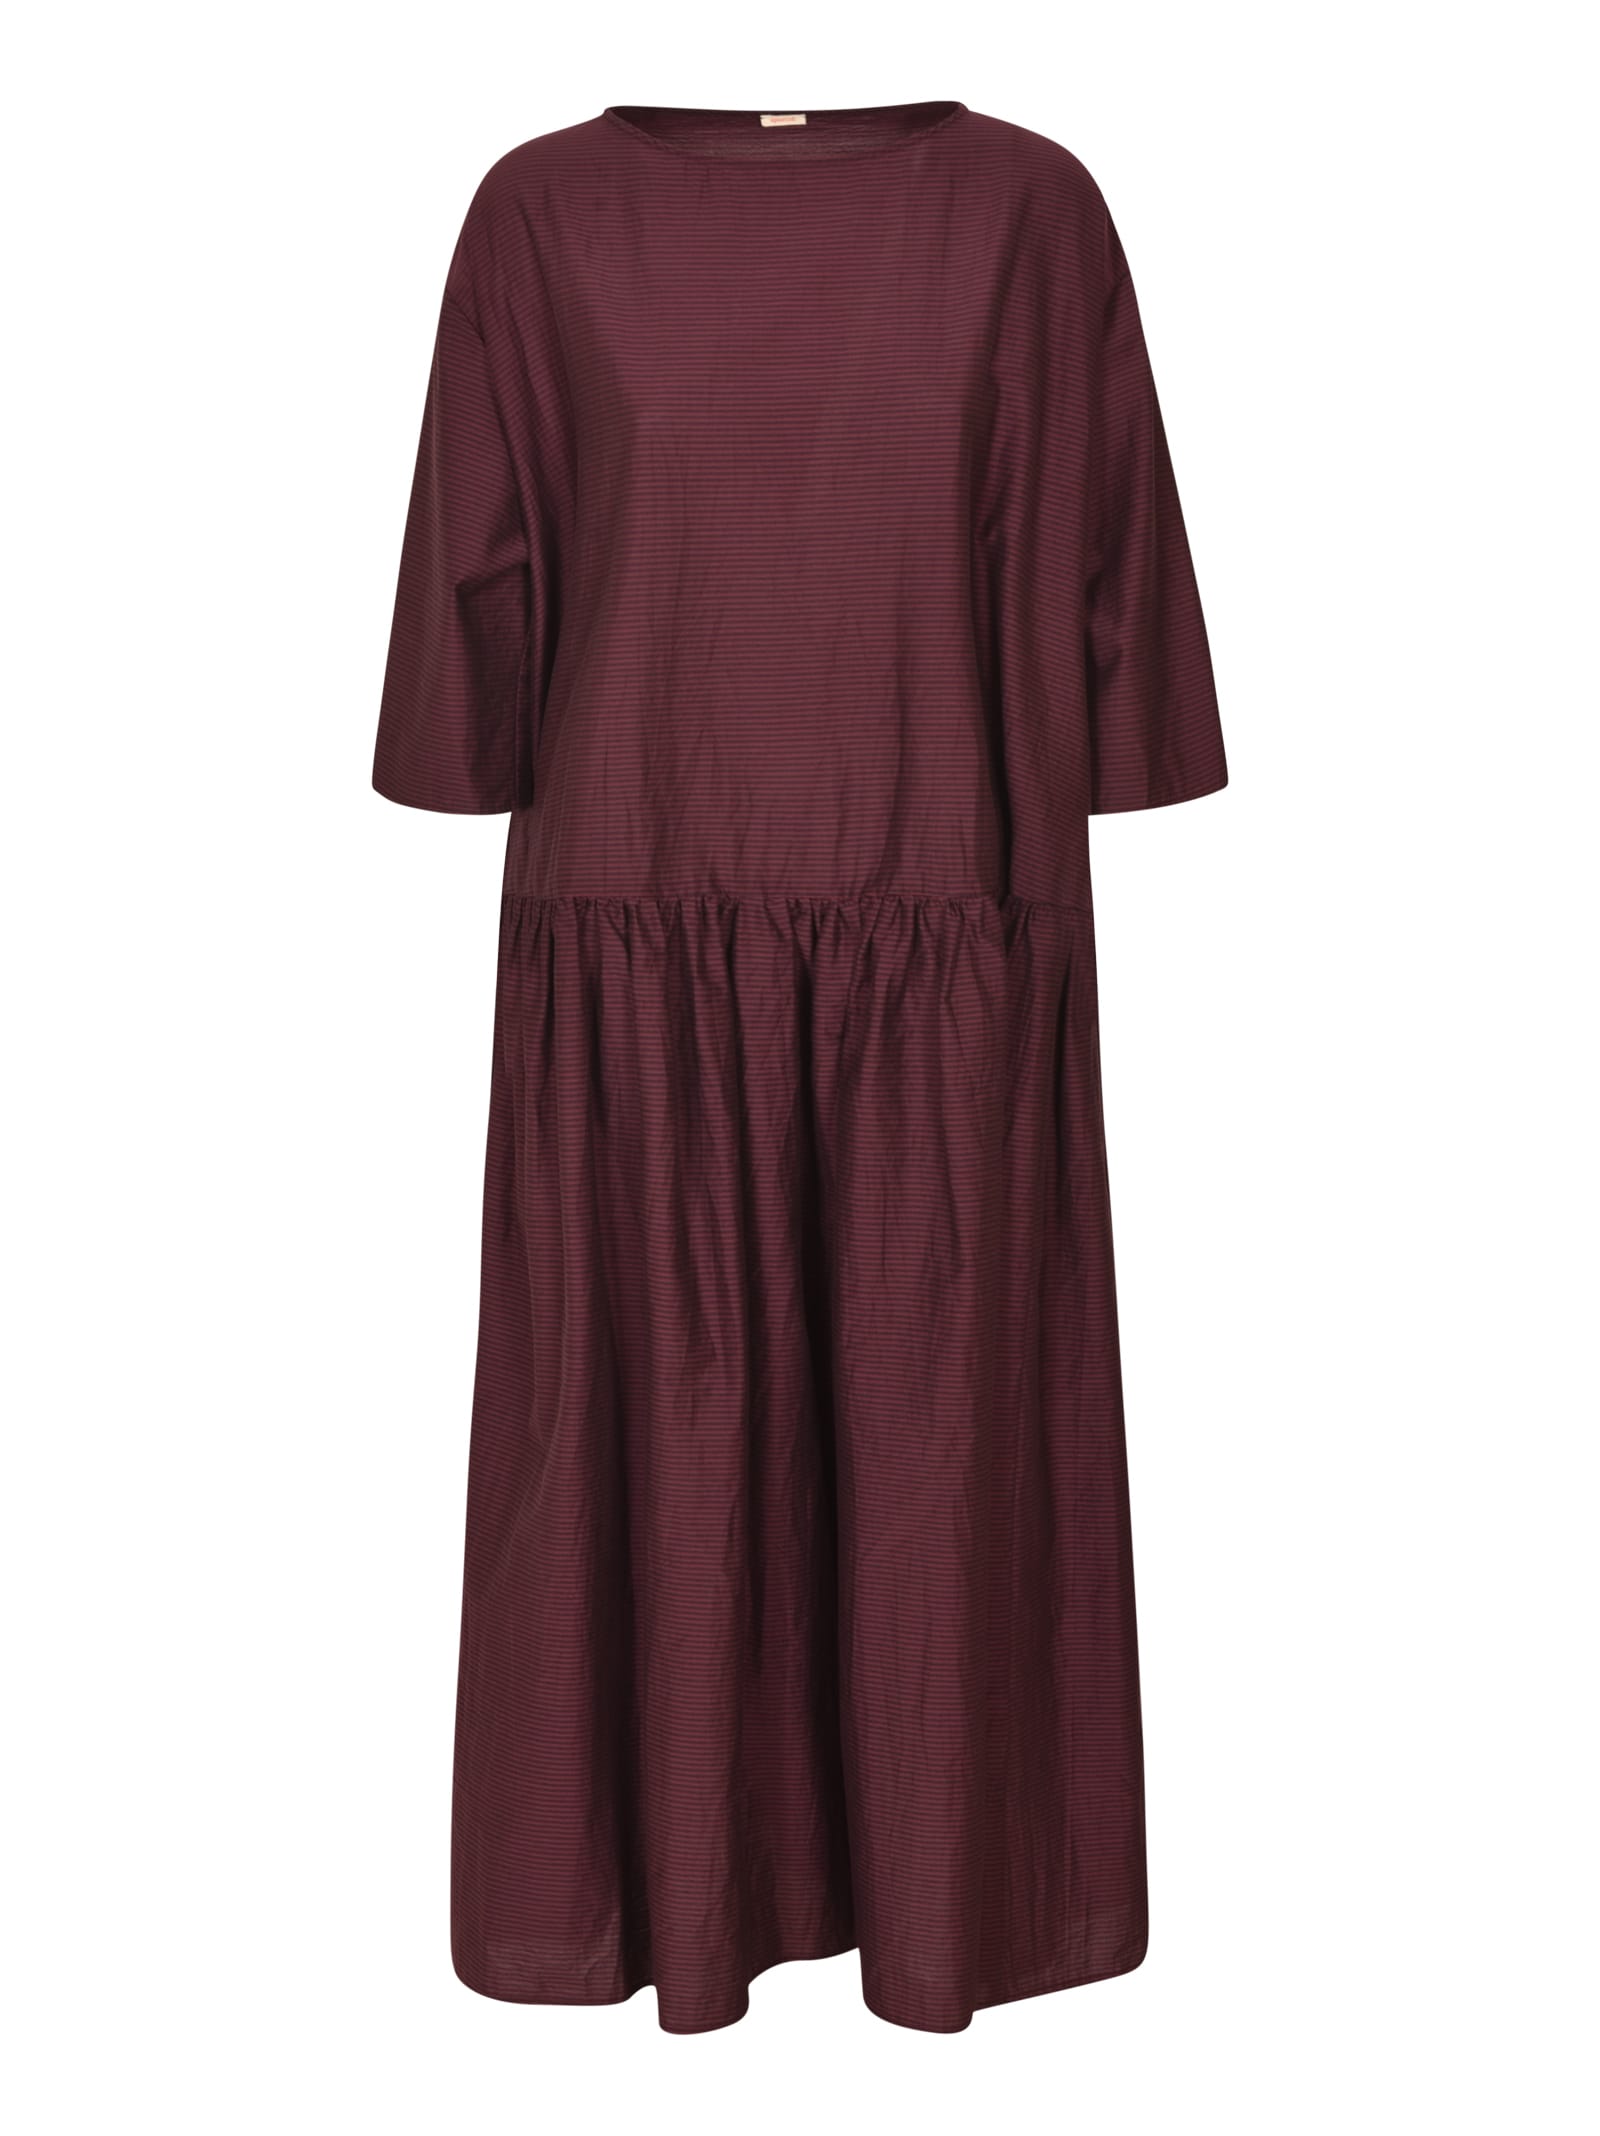 A Punto B Quarter-length Plain Dress In Melanzana Purple